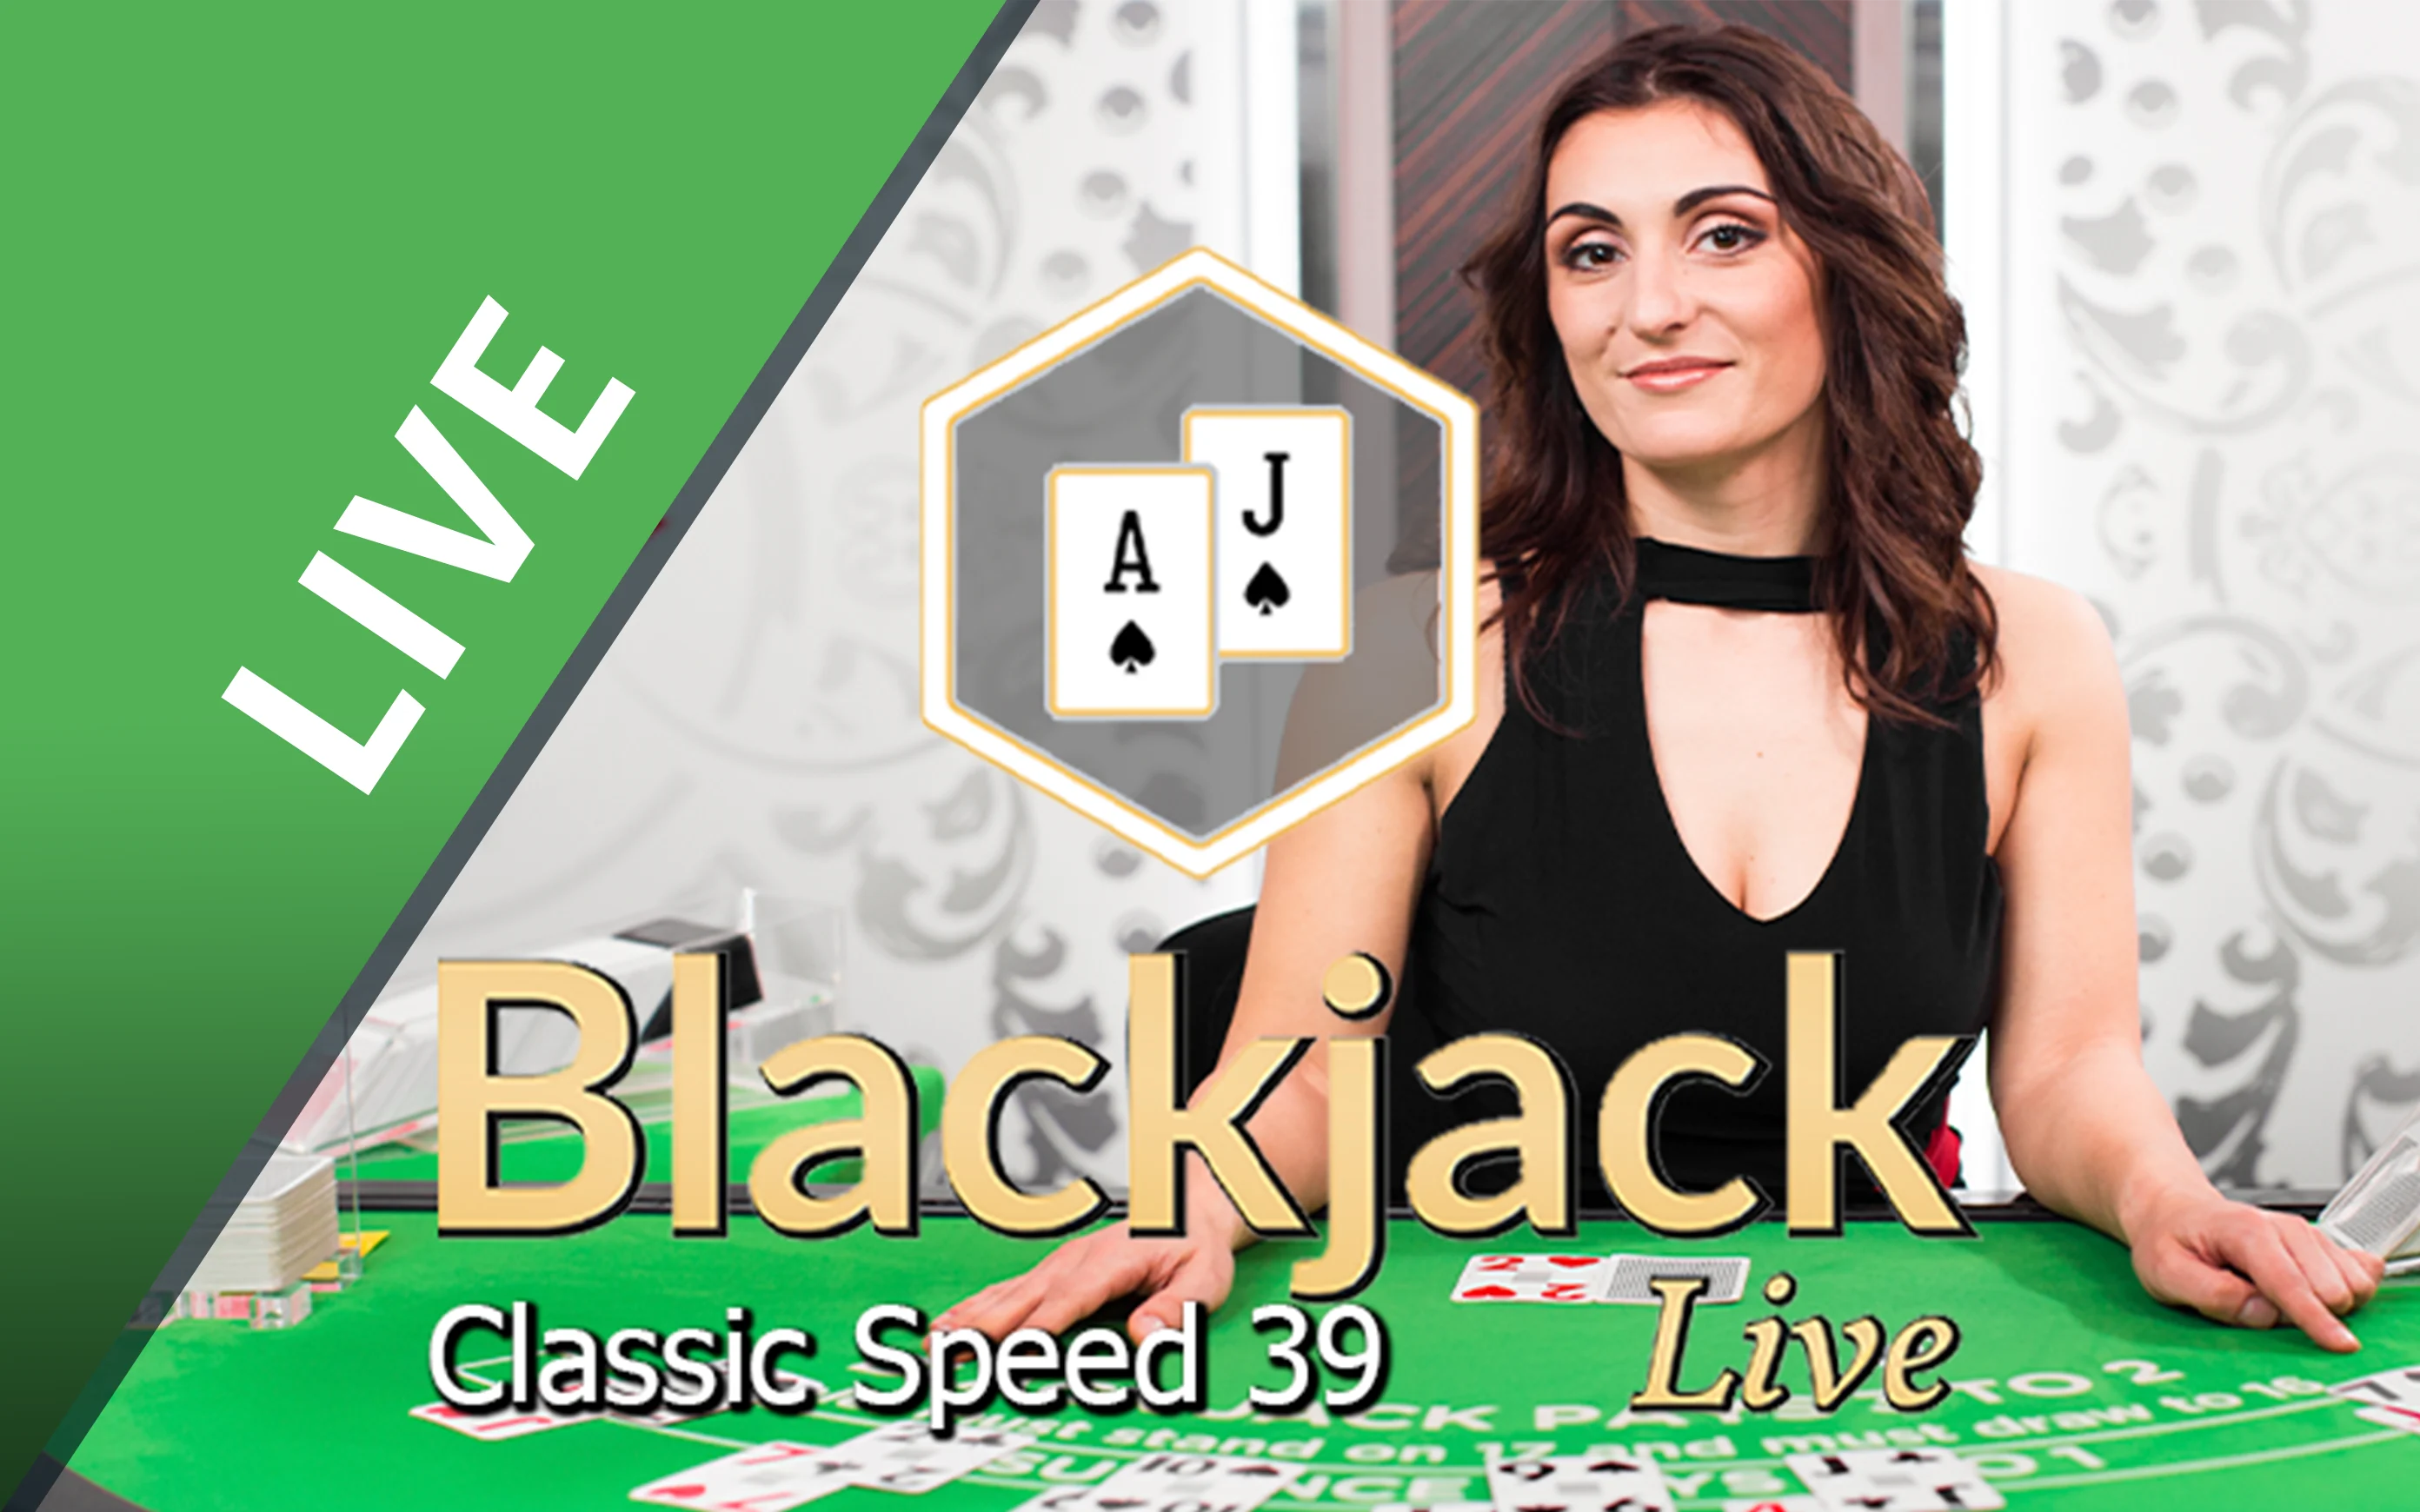 Play Classic Speed Blackjack 39 on Starcasino.be online casino